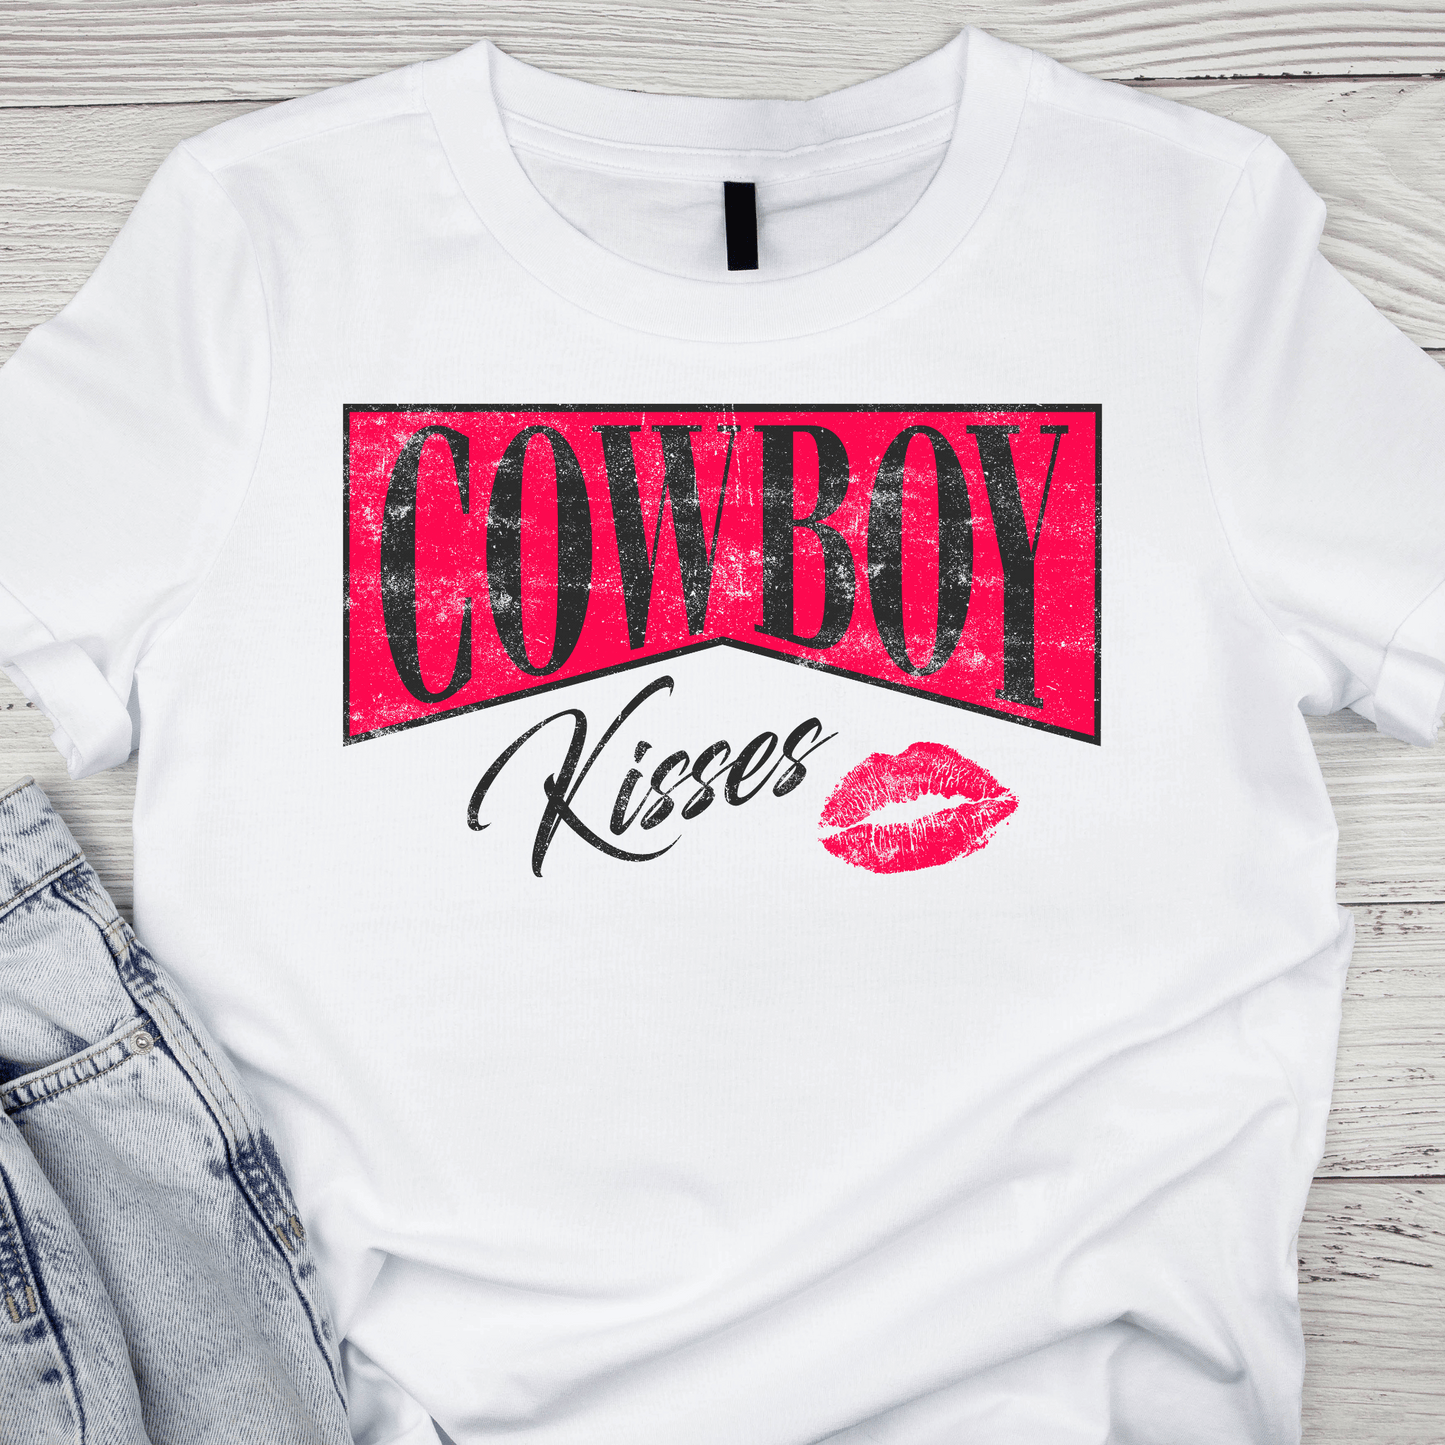 Cowboy Kisses DTF UVDTF tshirts t-shirt apparel htv premade 3d printing